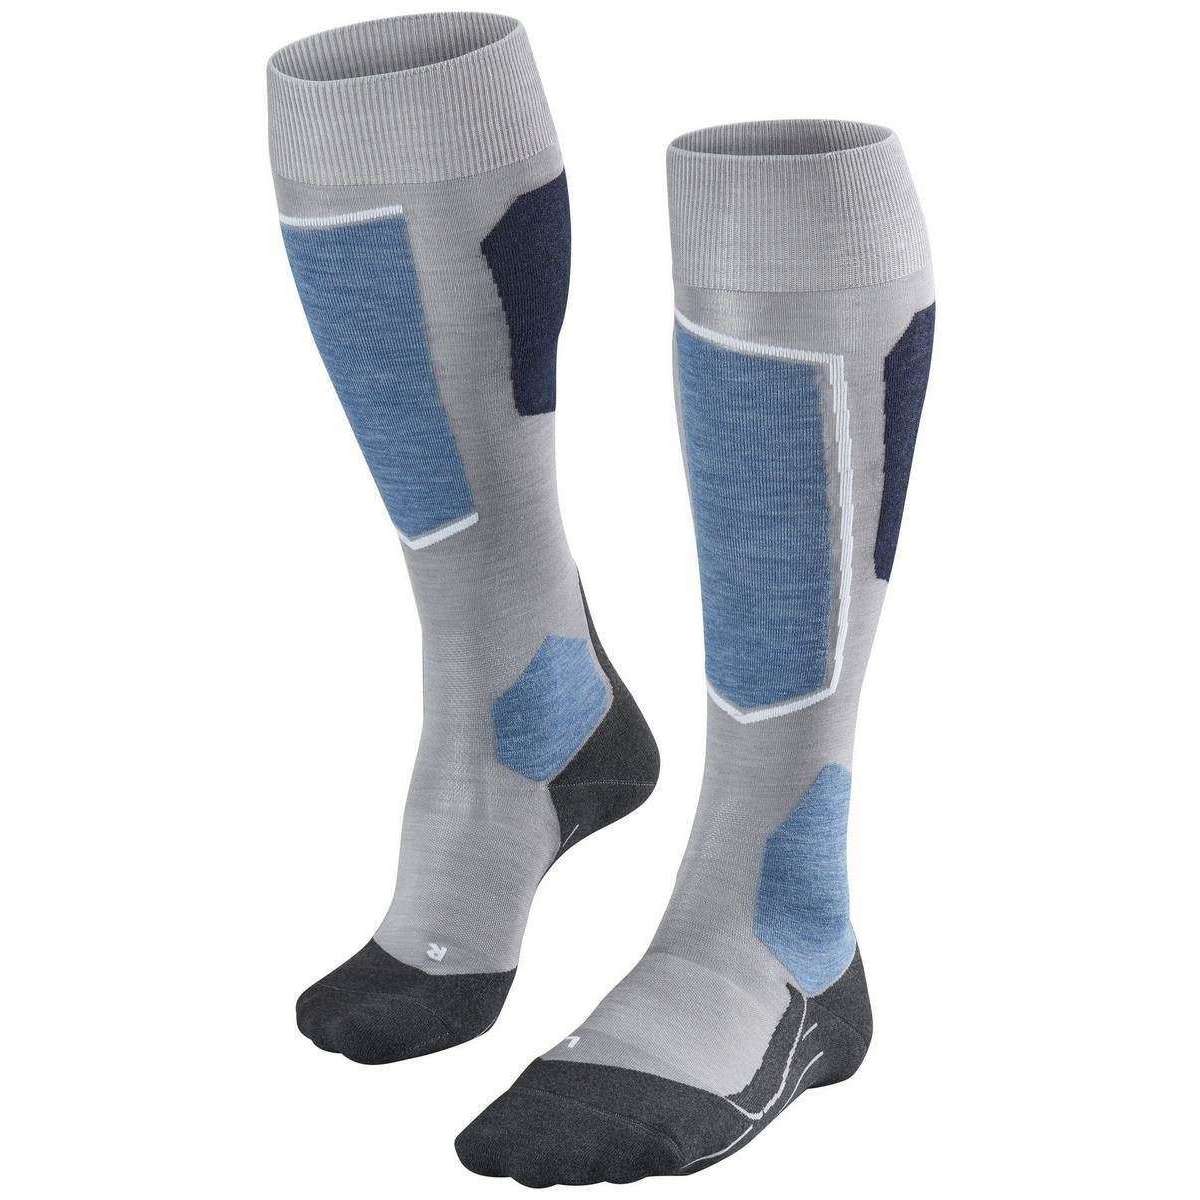 Falke Skiing 6 Knee High Socks - Mid Grey Mel